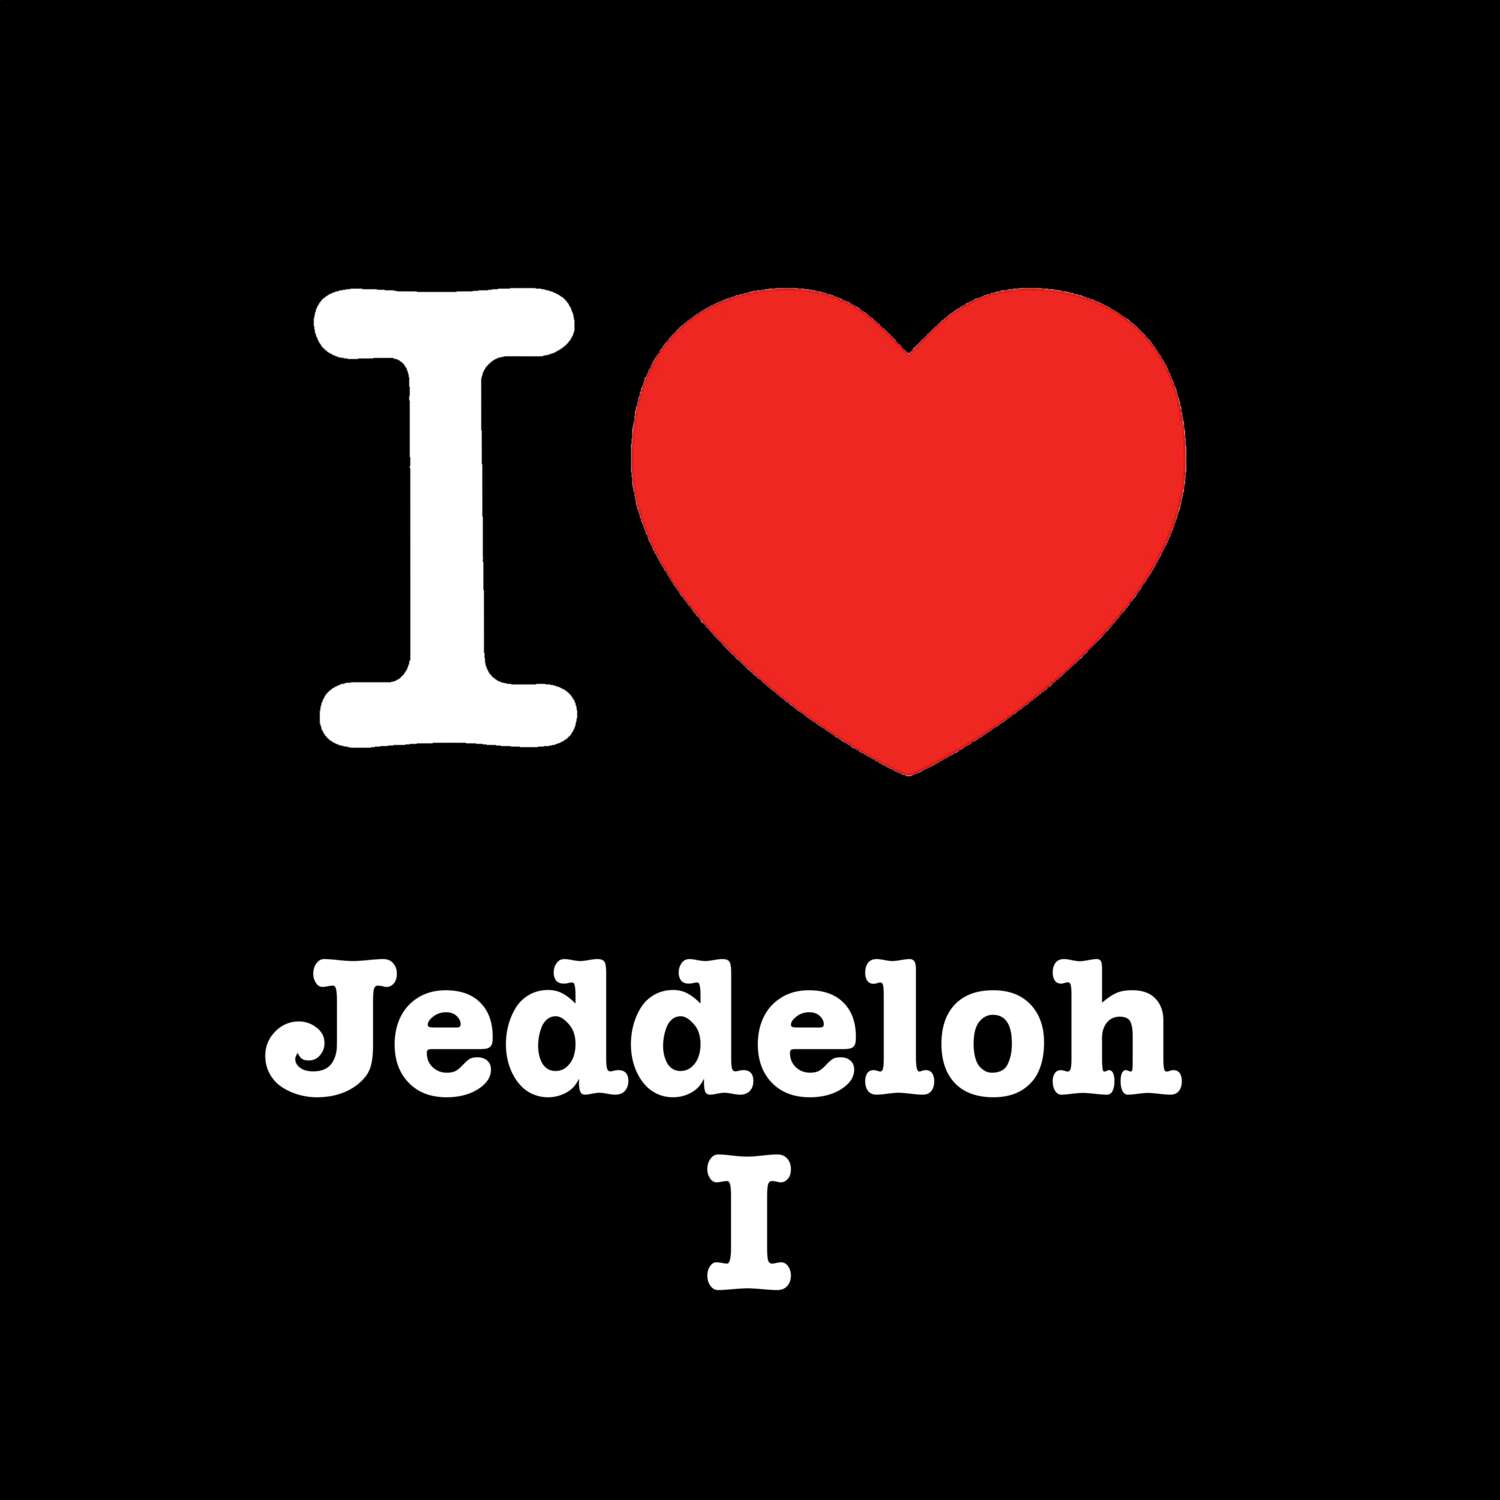 Jeddeloh I T-Shirt »I love«